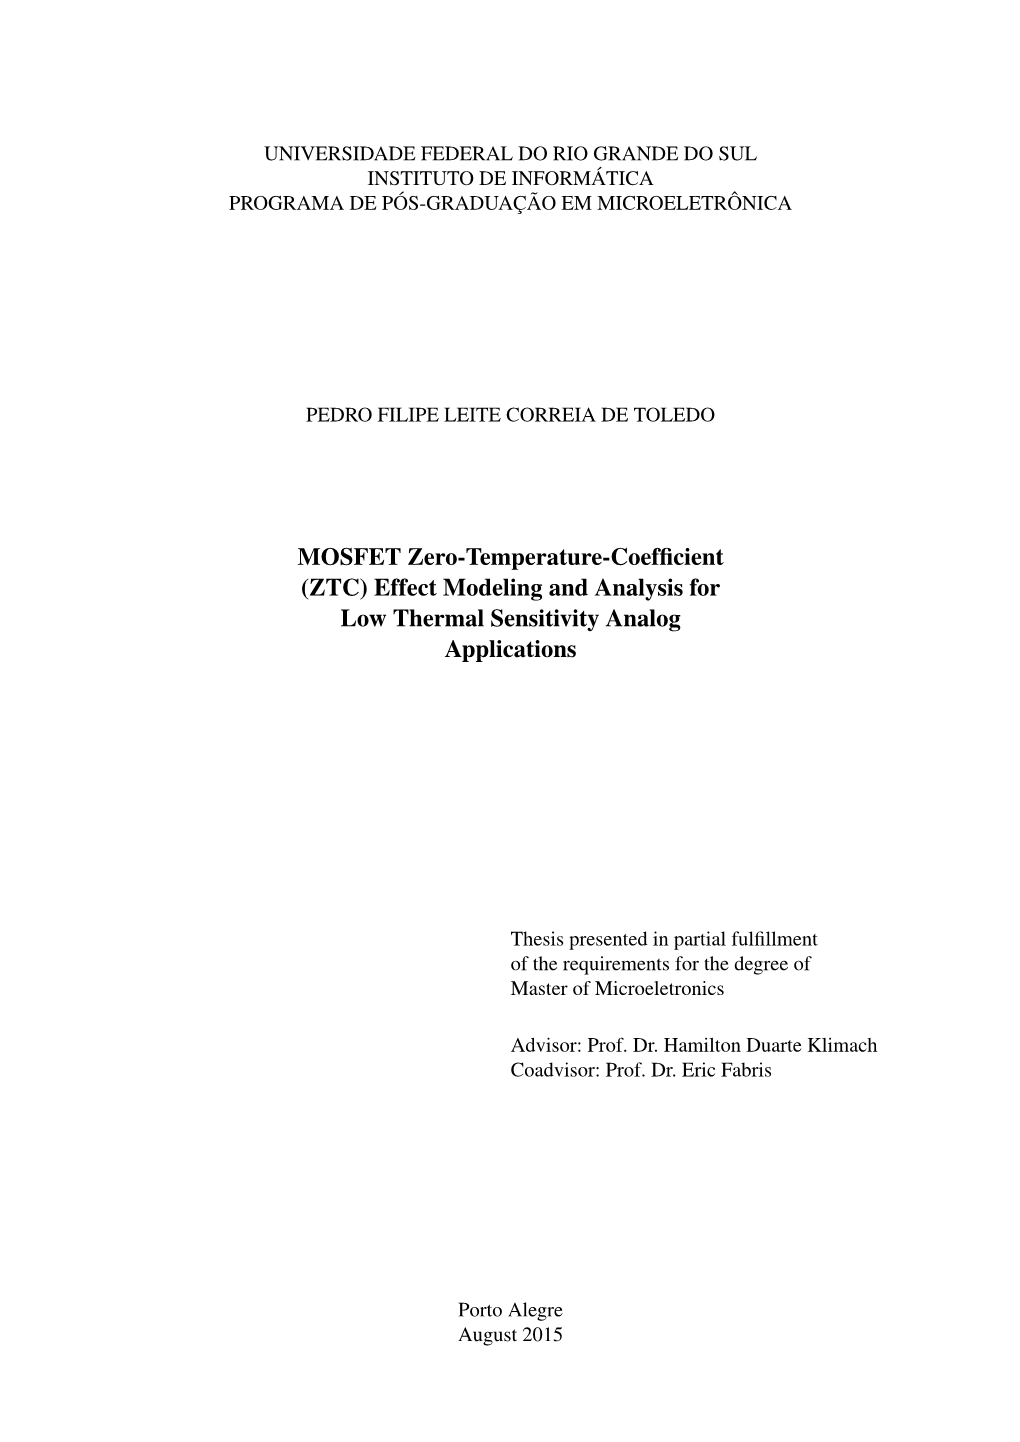 MOSFET Zero-Temperature-Coefficient (ZTC